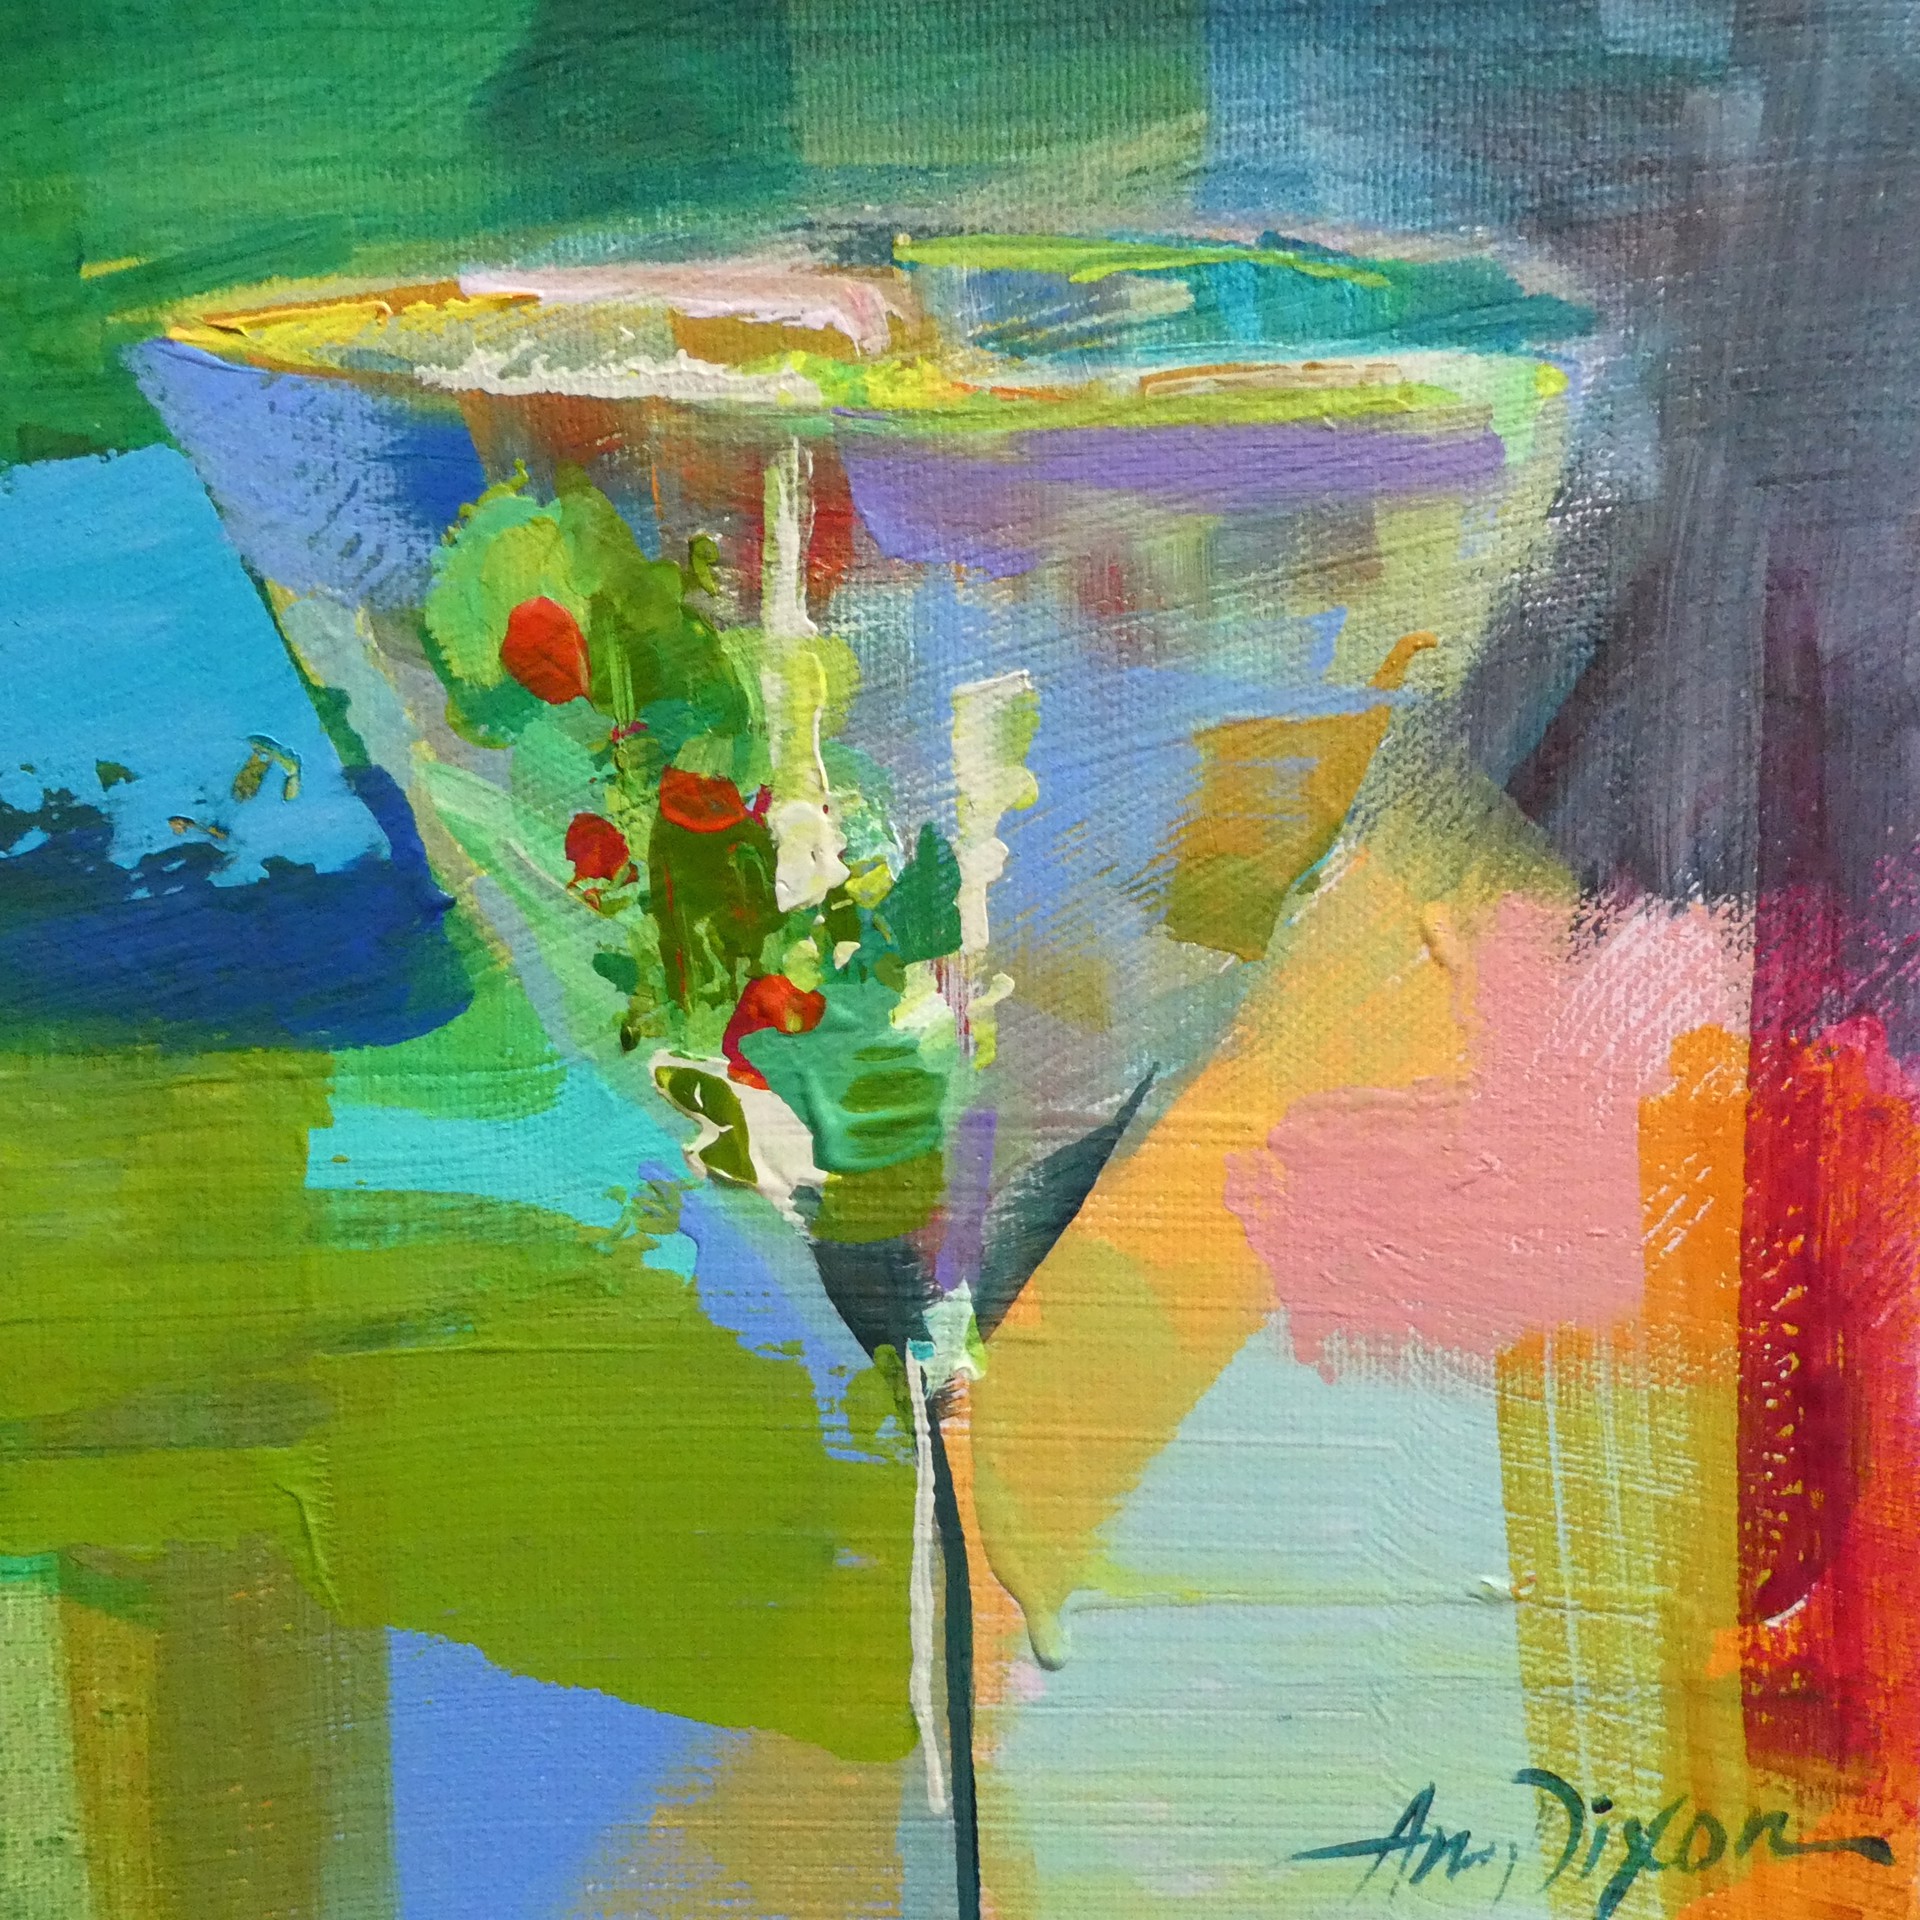 Martini Bleu by Amy Dixon